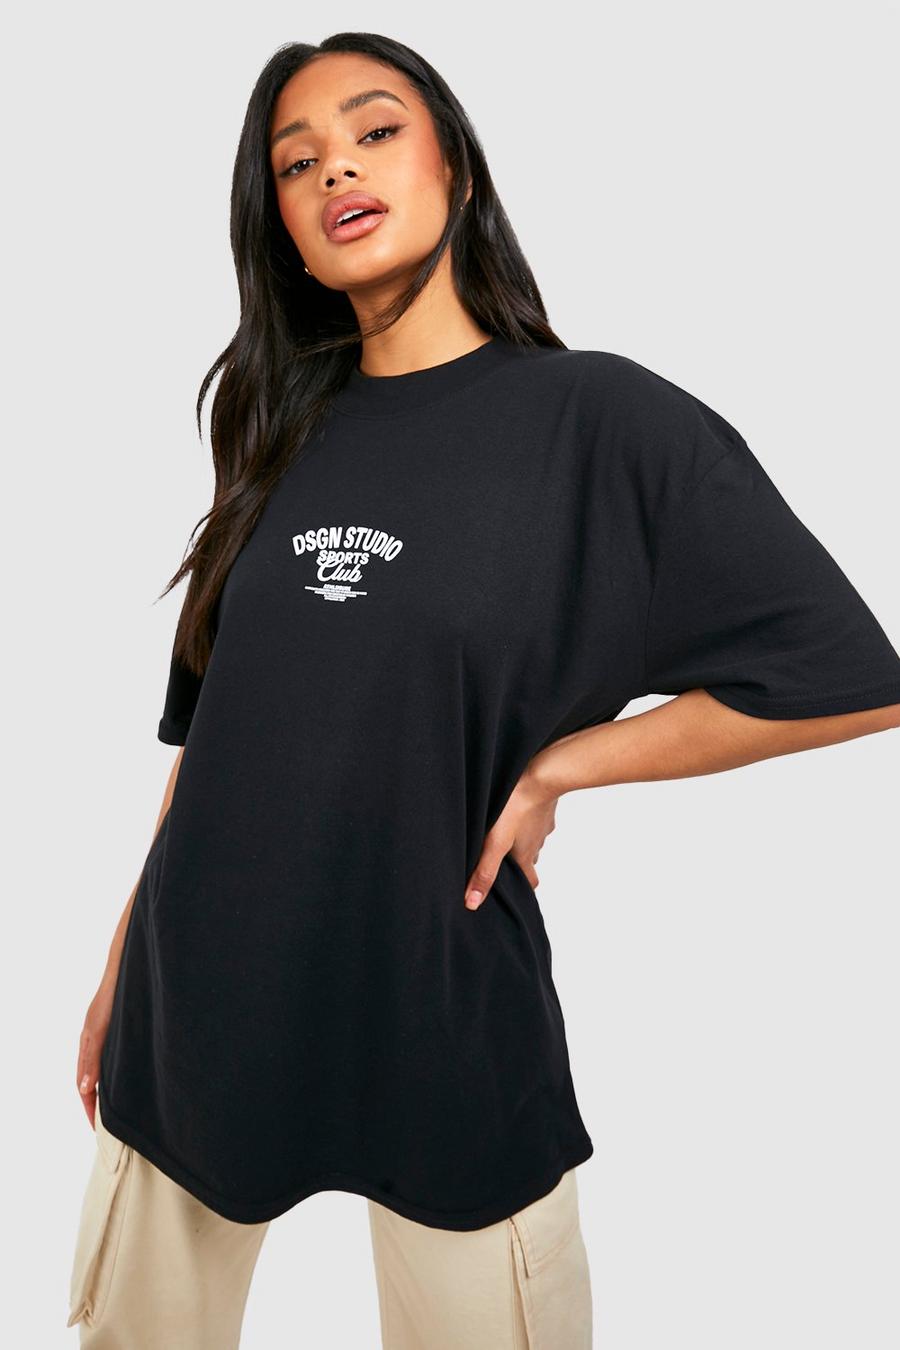 Black Dsgn Studio Sports Club Oversize t-shirt med slogan